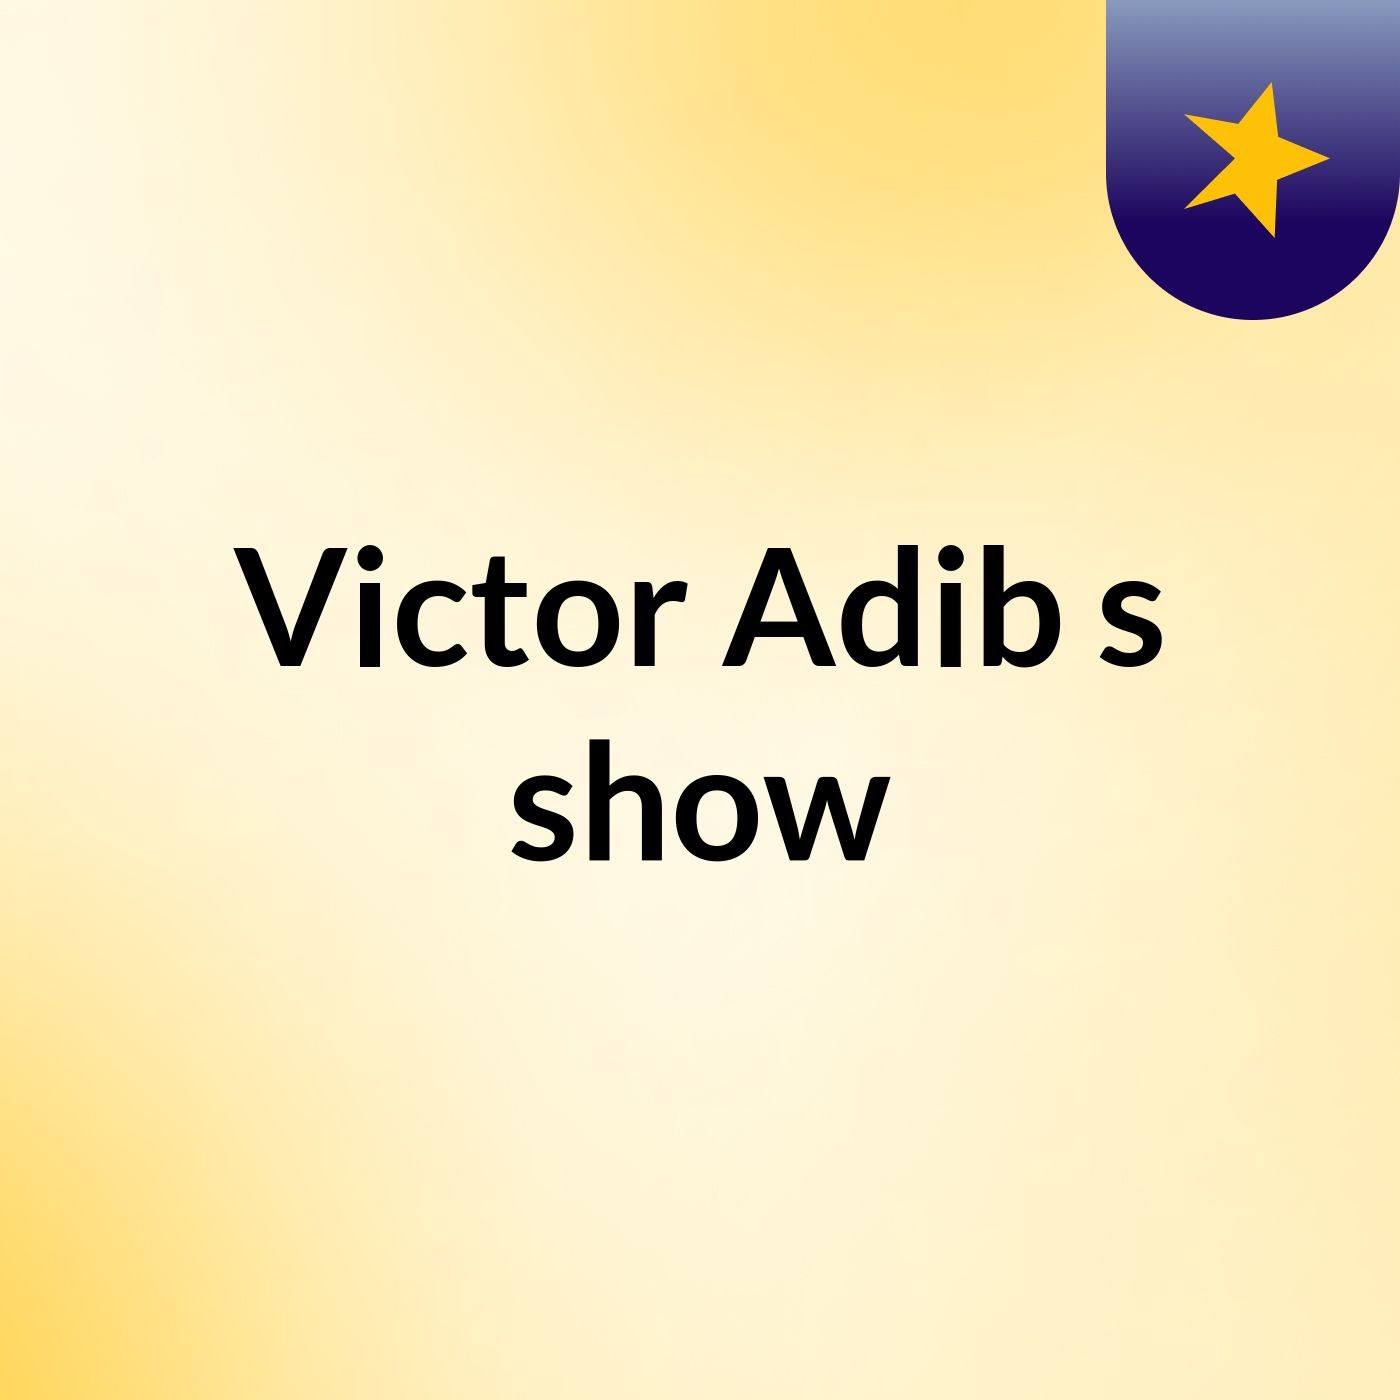 Victor Adib's show